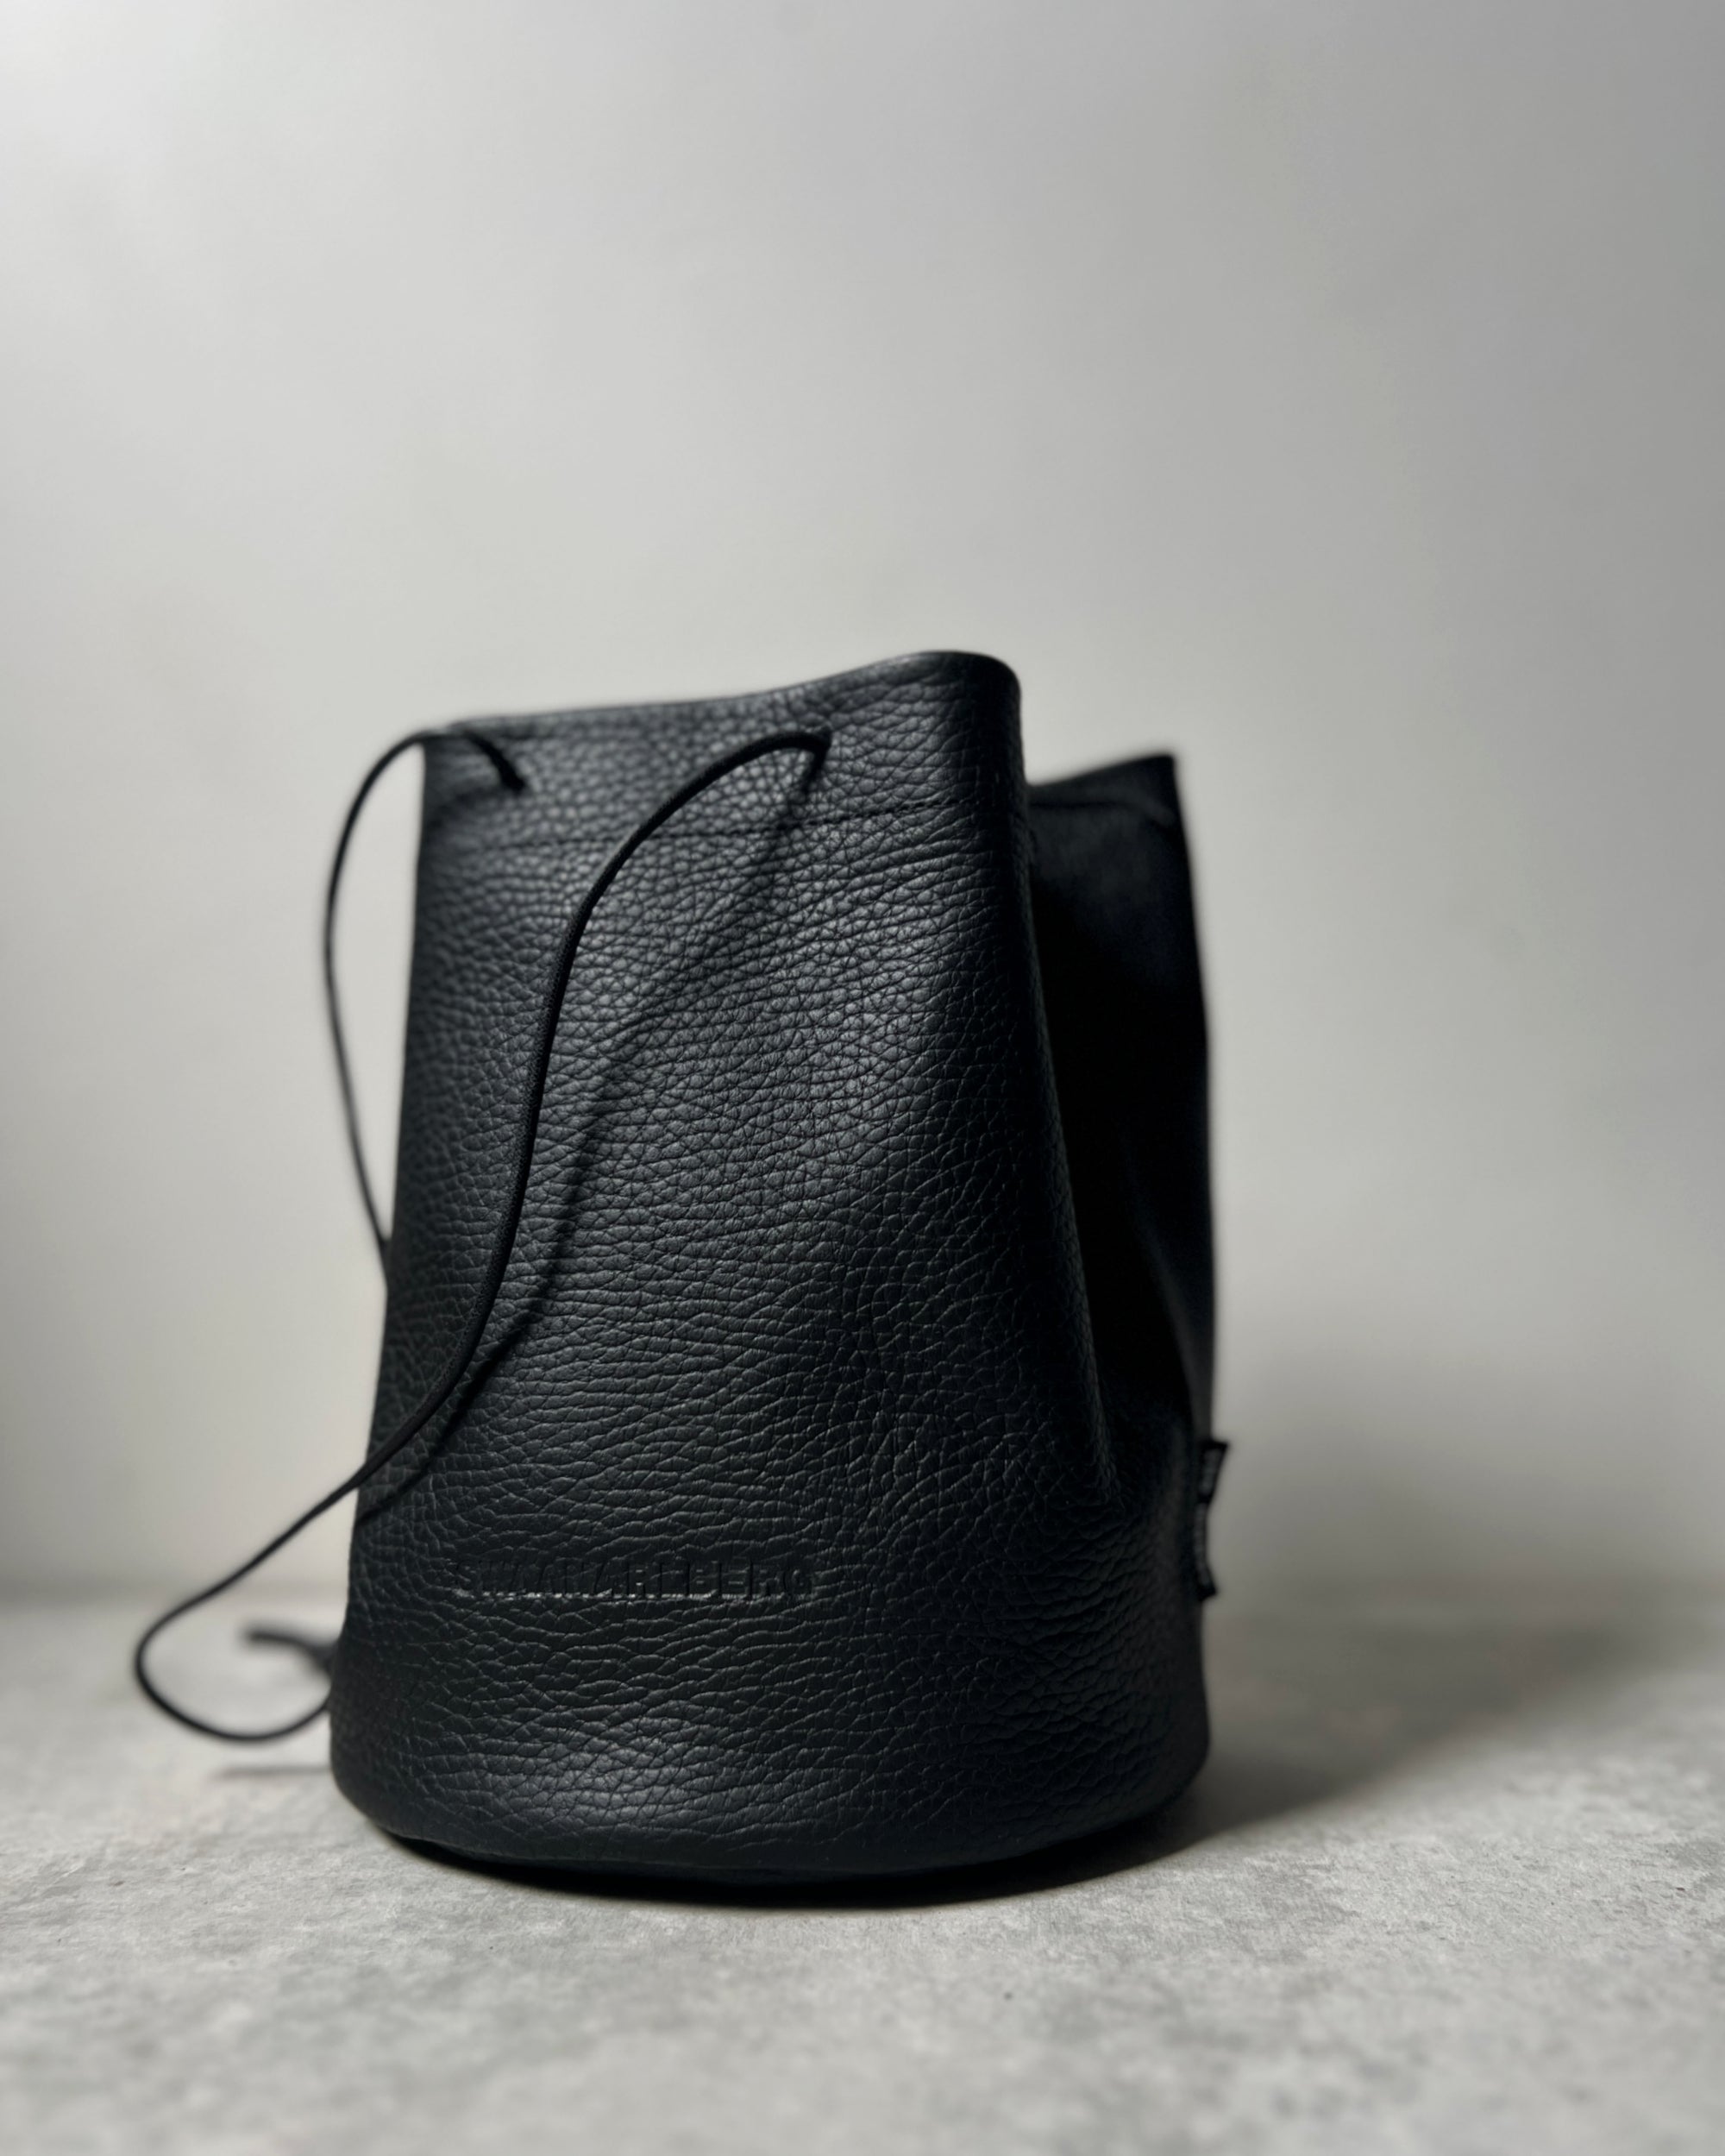 swaanarlberg : japanese leather bag in carbon